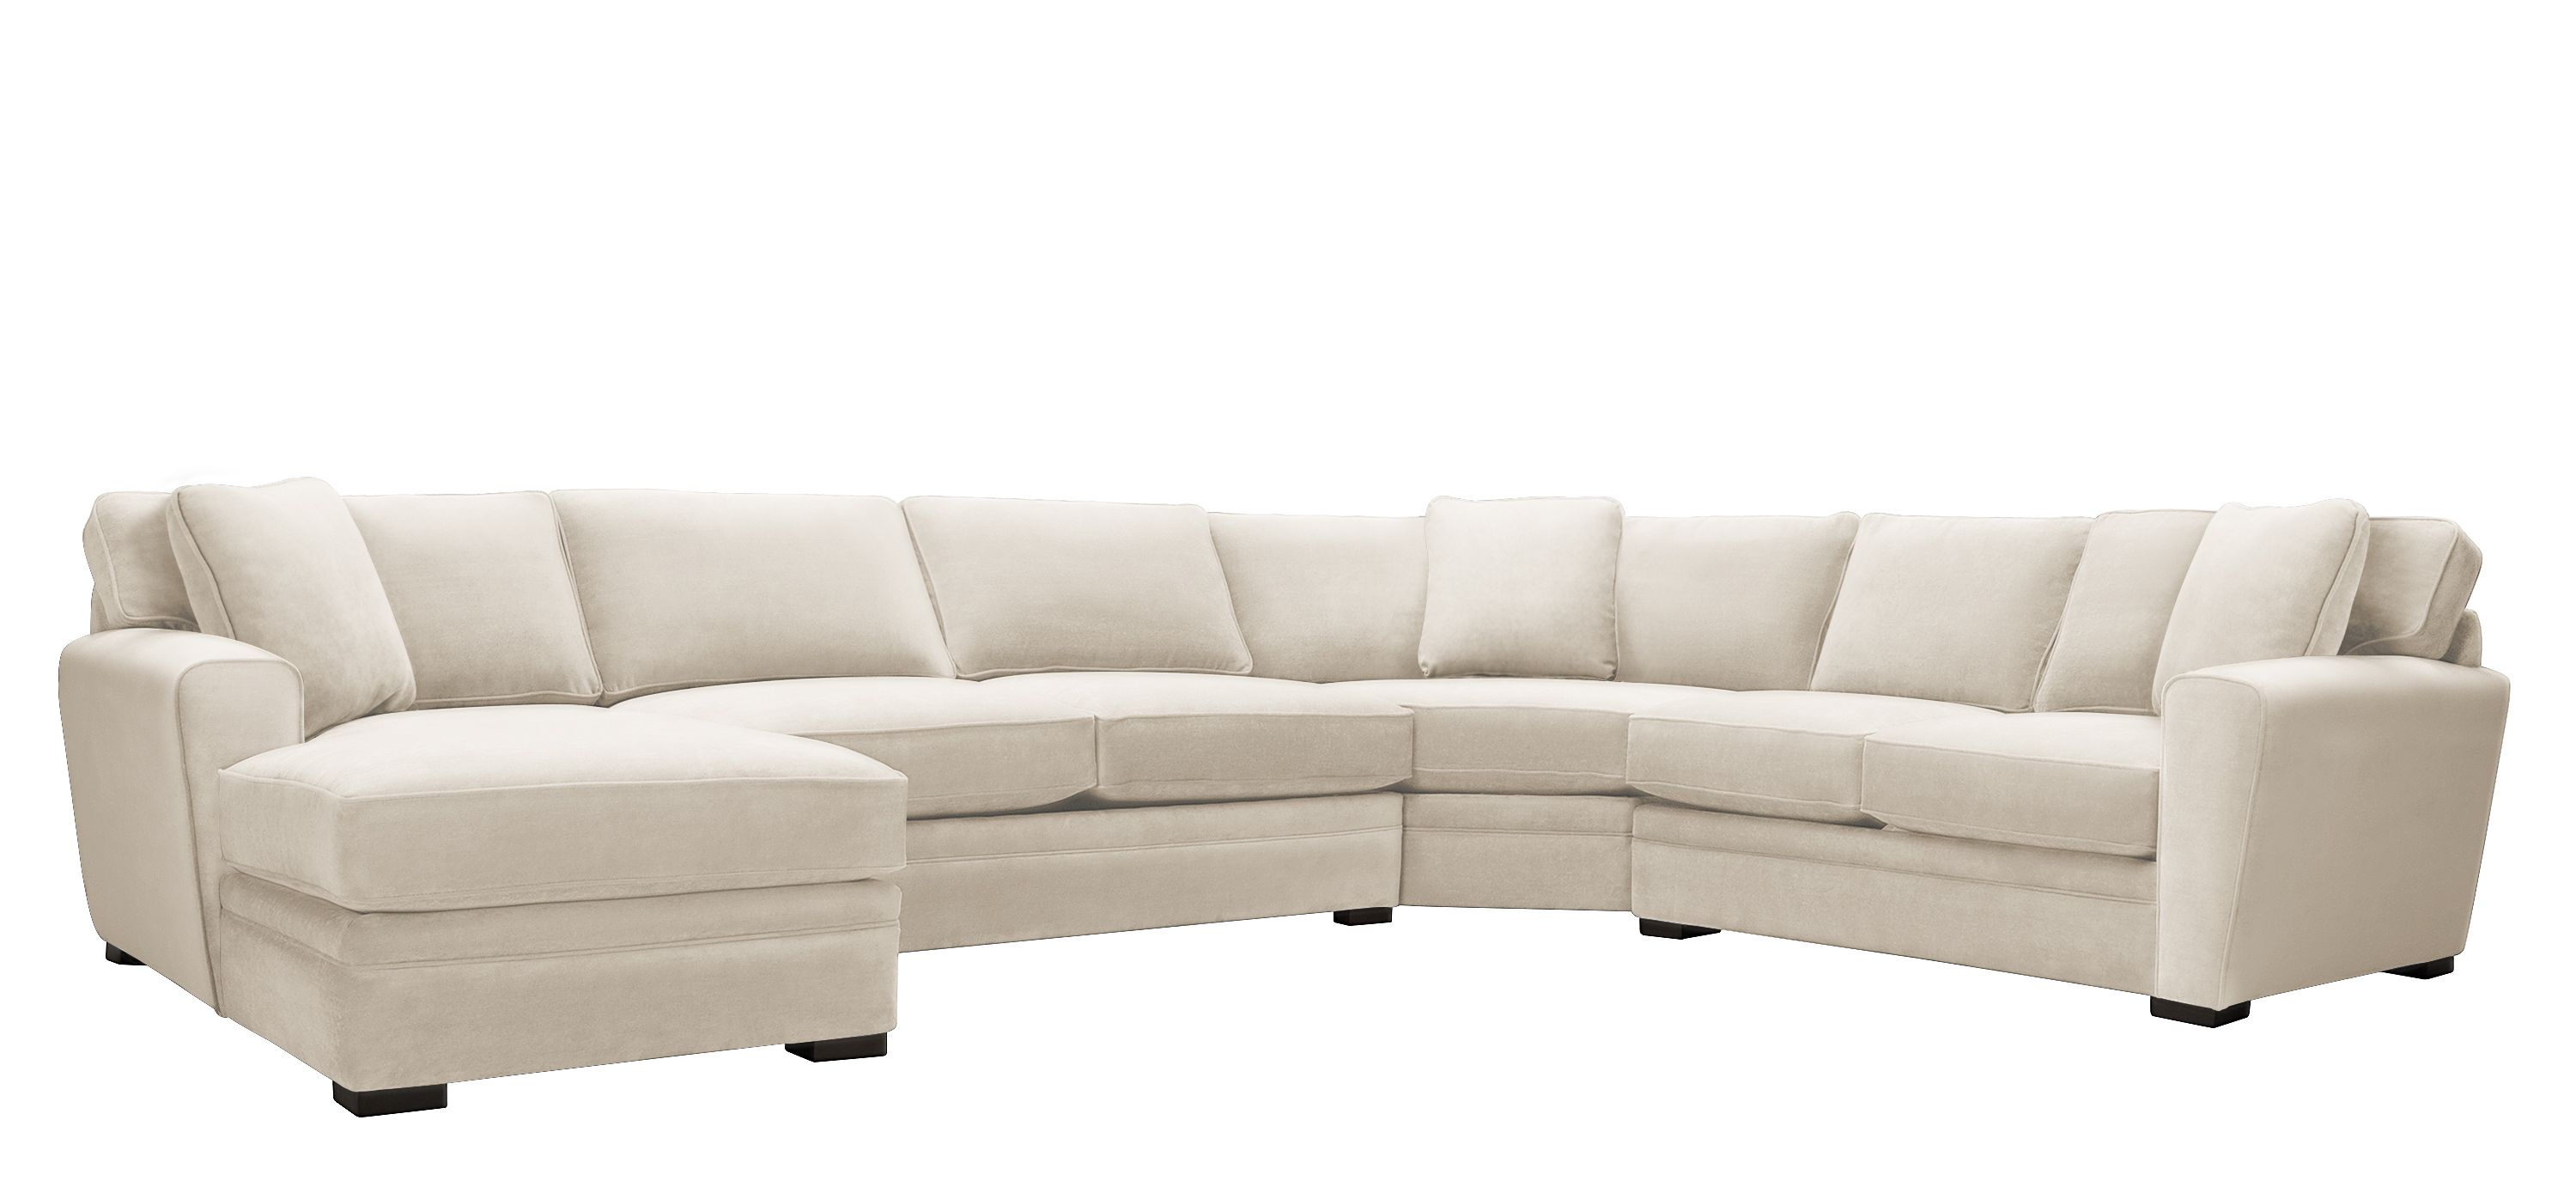 Artemis II 4-pc. Full Sleeper Sectional Sofa